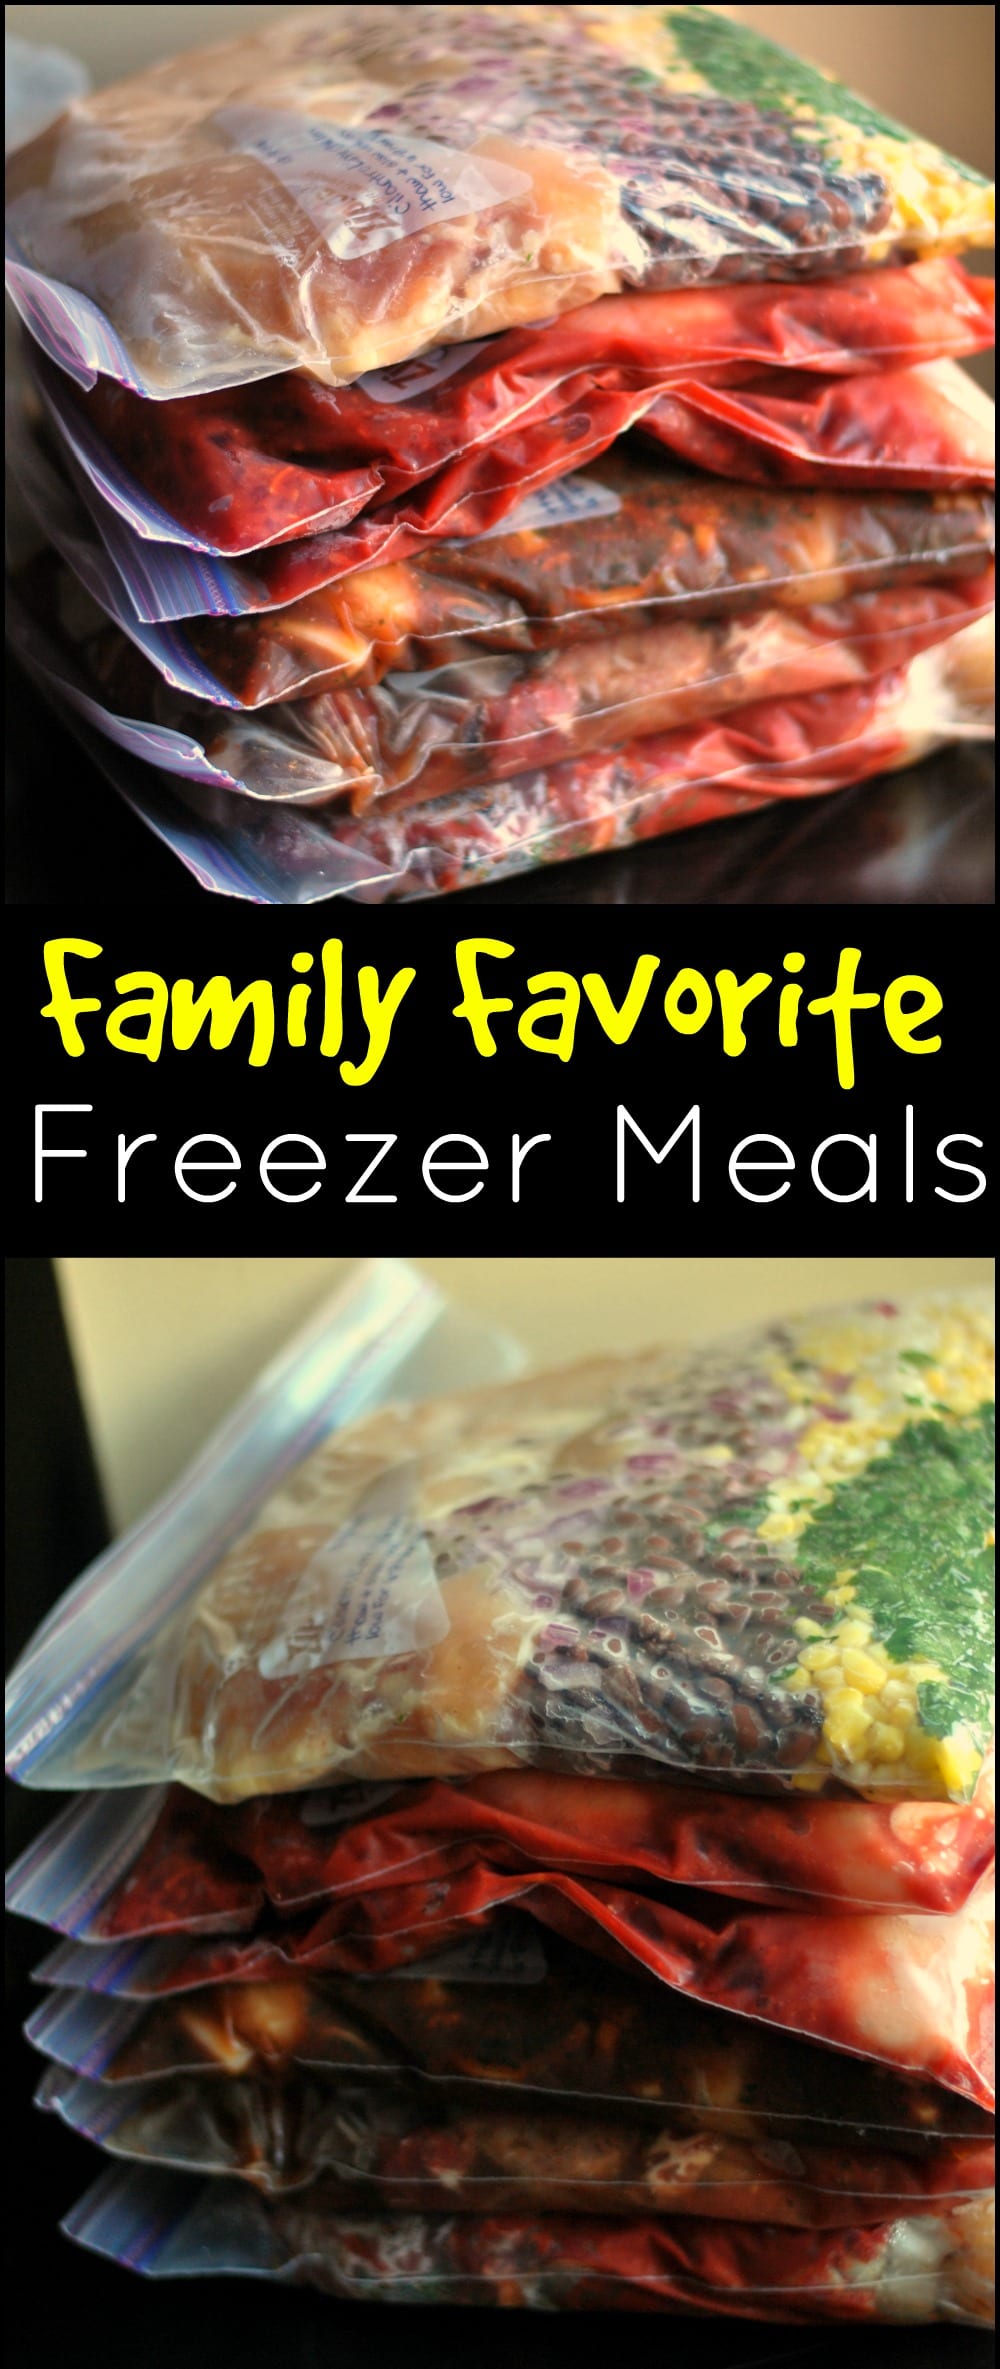 Make-Ahead Fresh Freezer Meals Kids Will Love